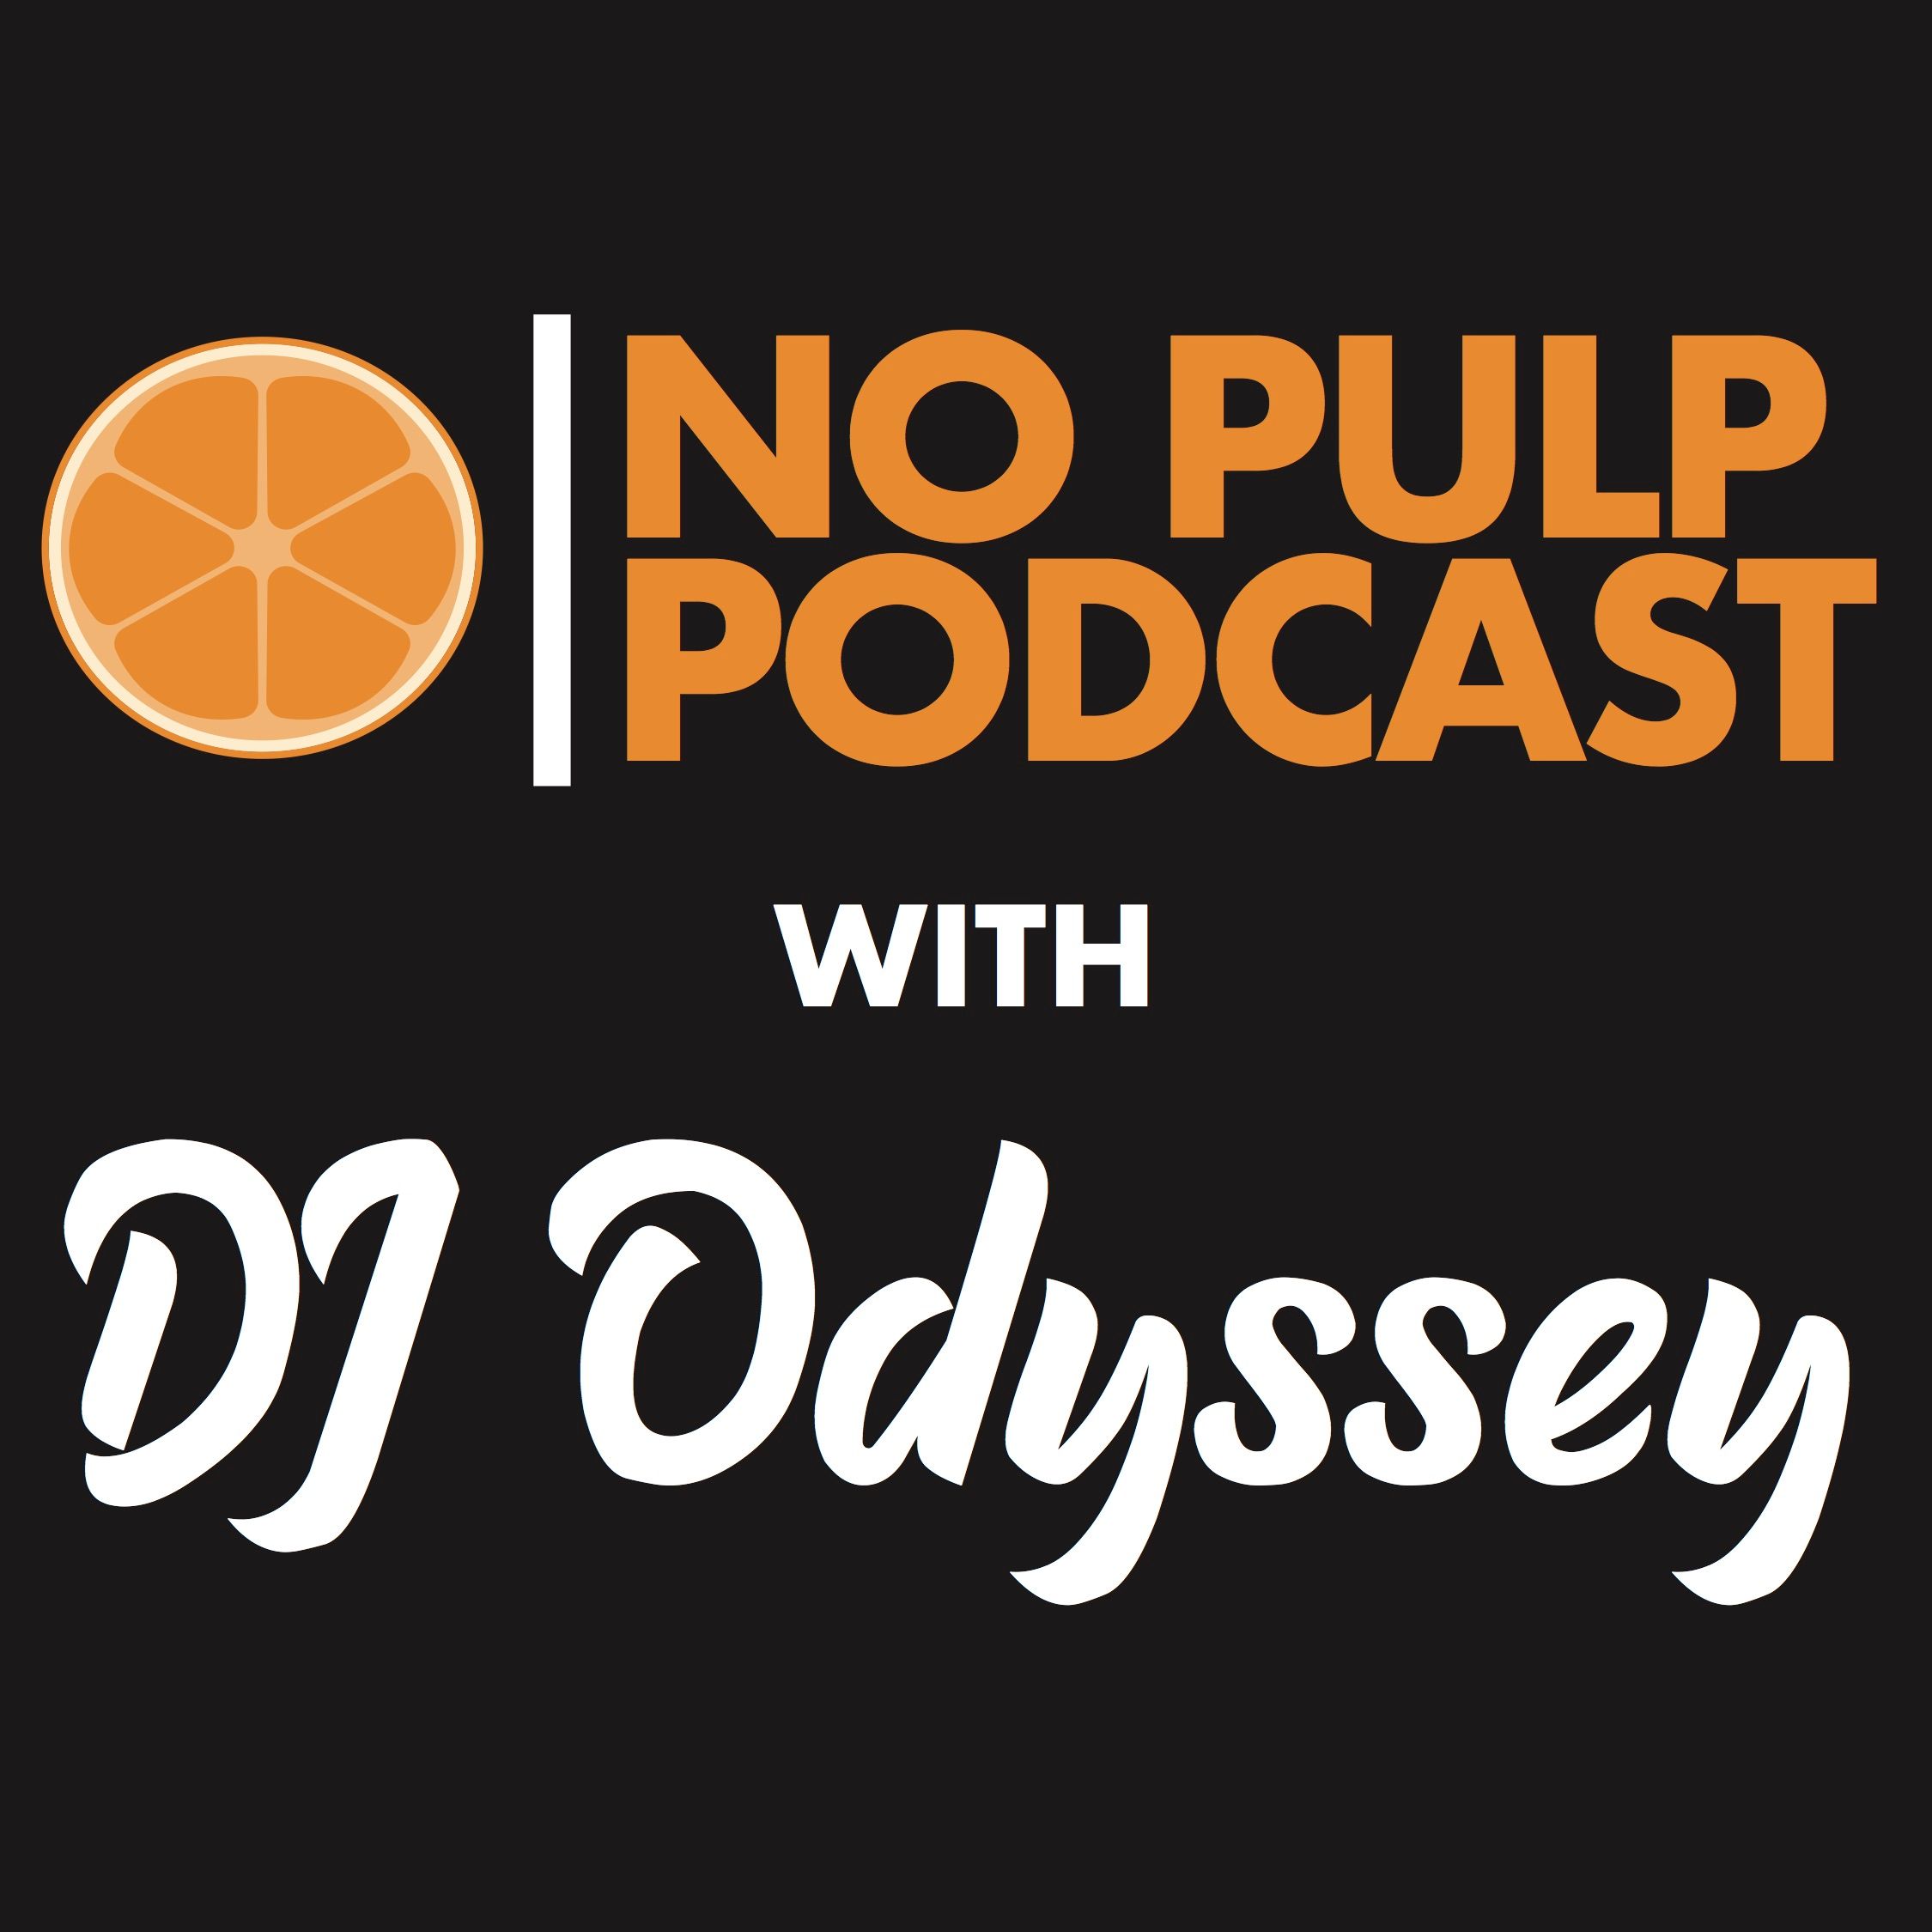 No Pulp Podcast